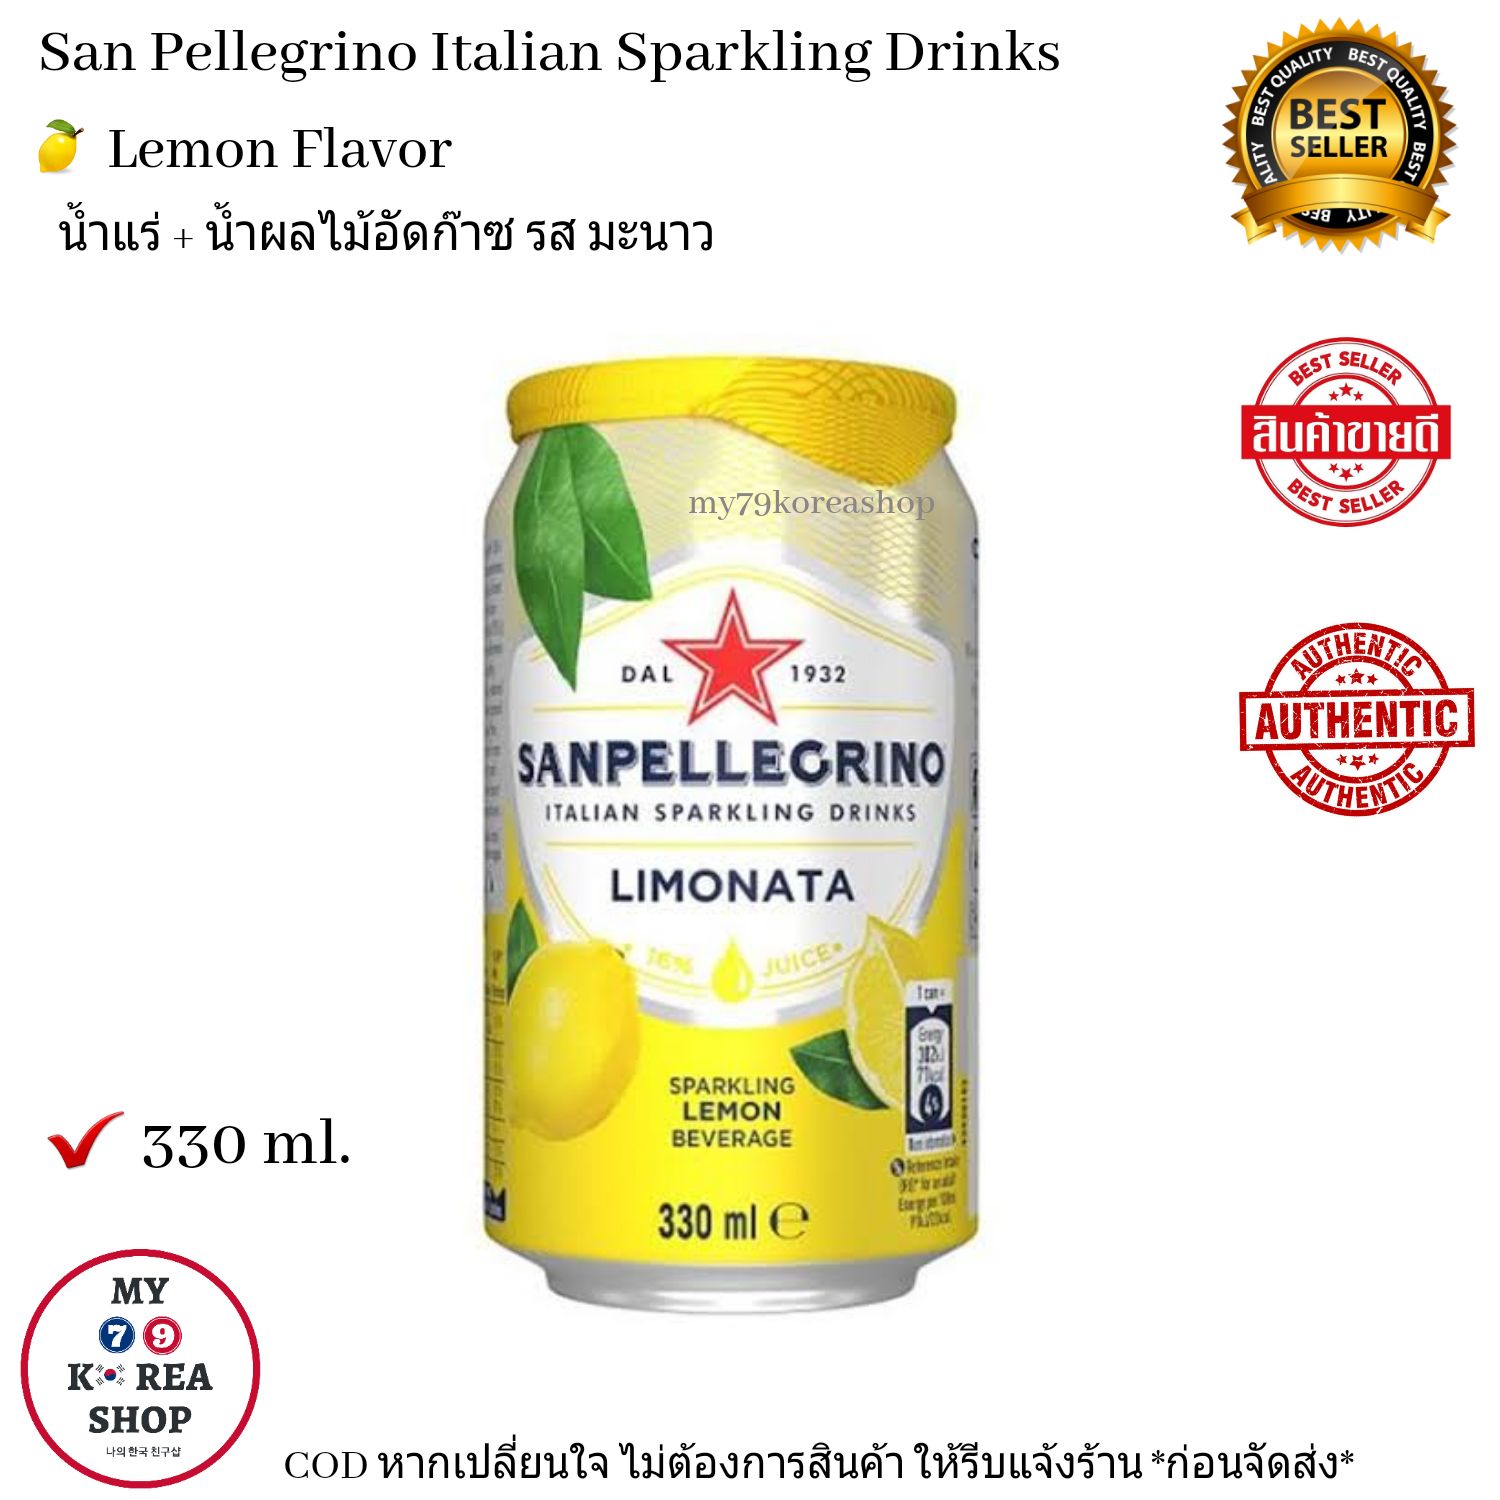 Sparkling Lemon Beverage 330 ml. น้ำแร่ + น้ำผลไม้อัดก๊าซ รส มะนาว ( SanPellegrino )